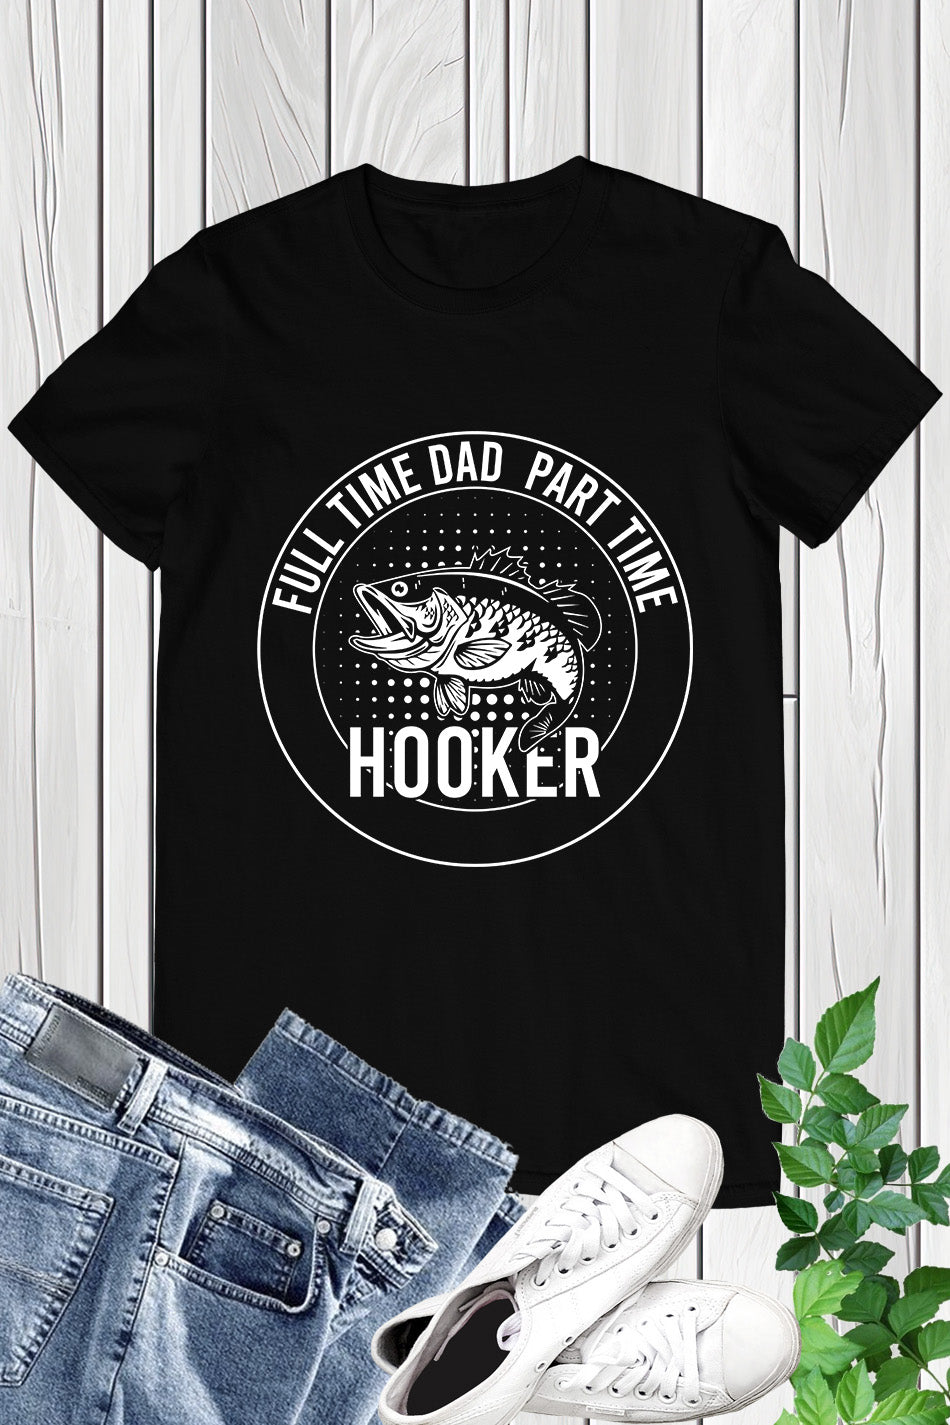 Full time Dad Part Time Hooker Shirt